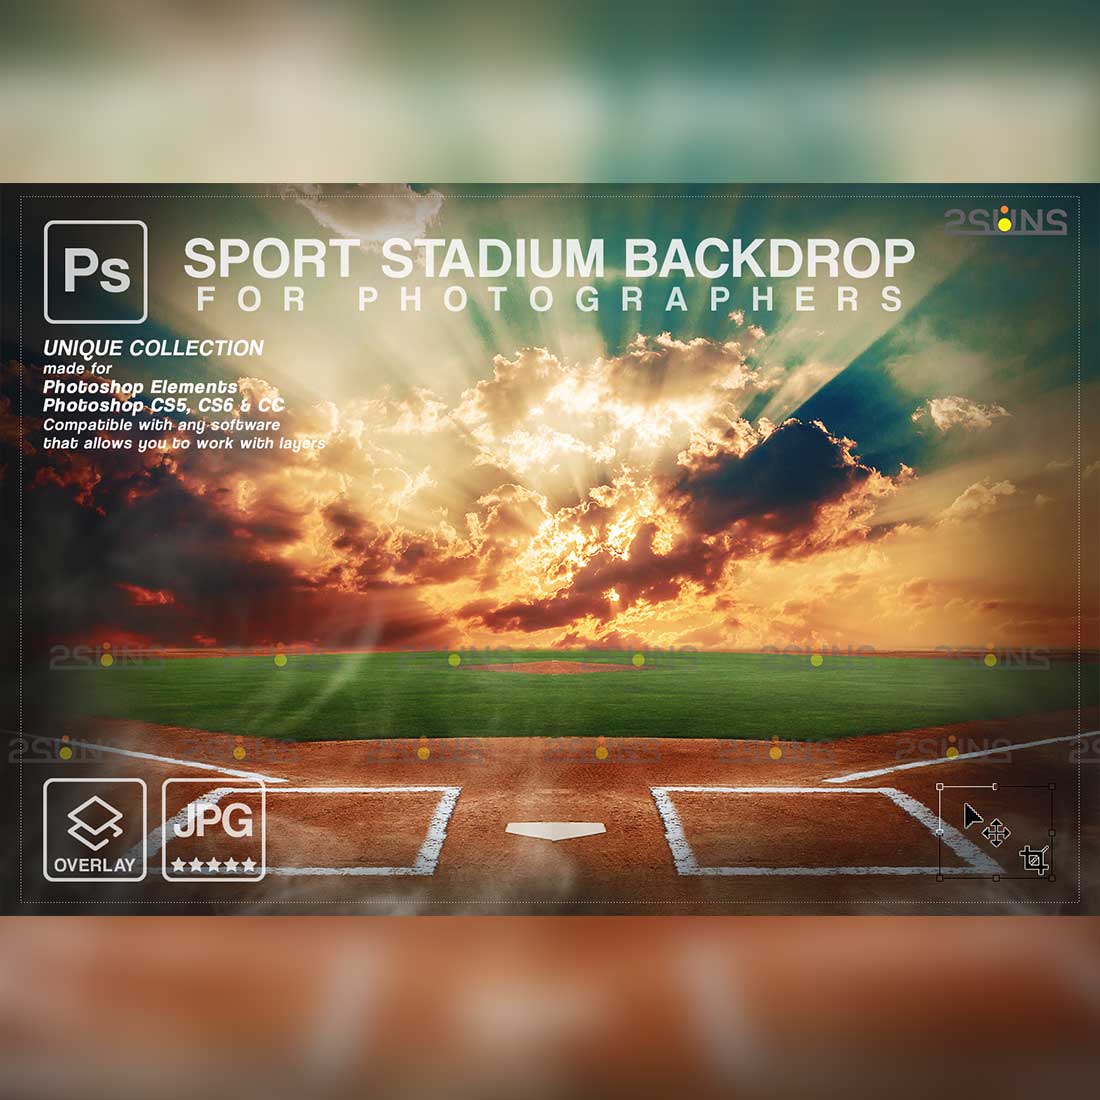 Baseball Sports Backdrop Digital Photo Background Preview Image.